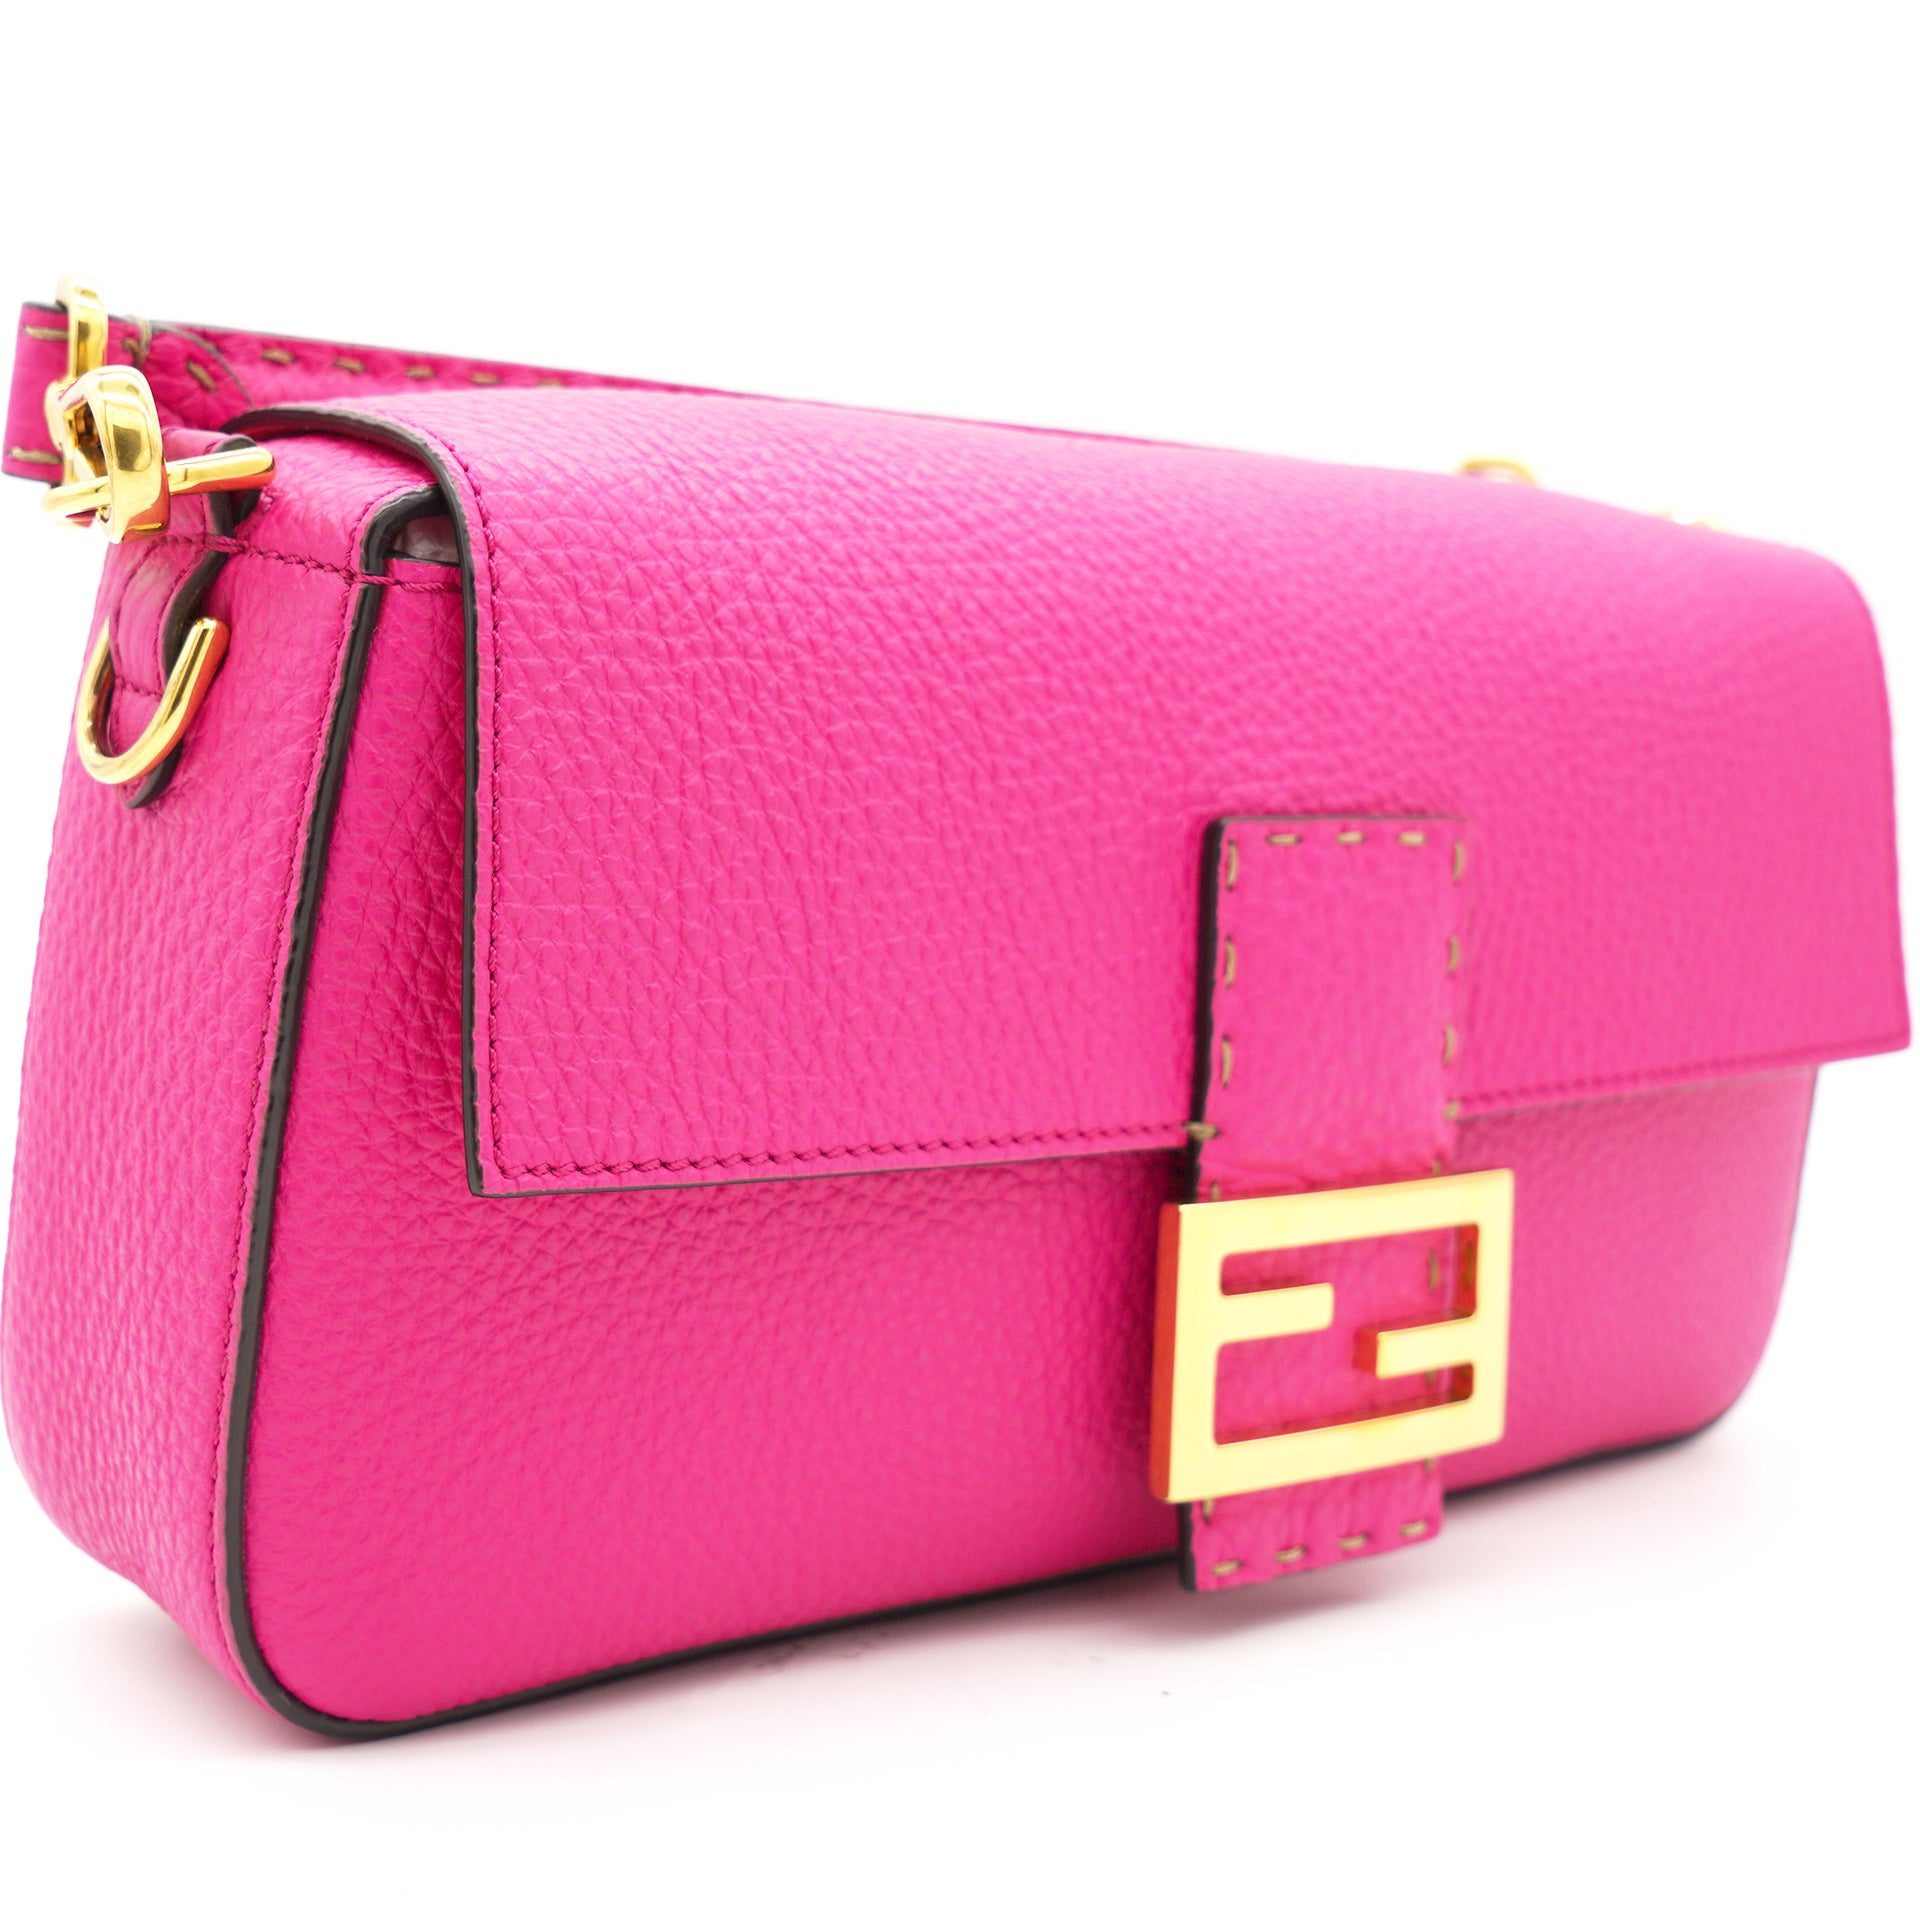 FENDI: By The Way bag in leather - Fuchsia | FENDI mini bag 8BS067ABVL  online at GIGLIO.COM